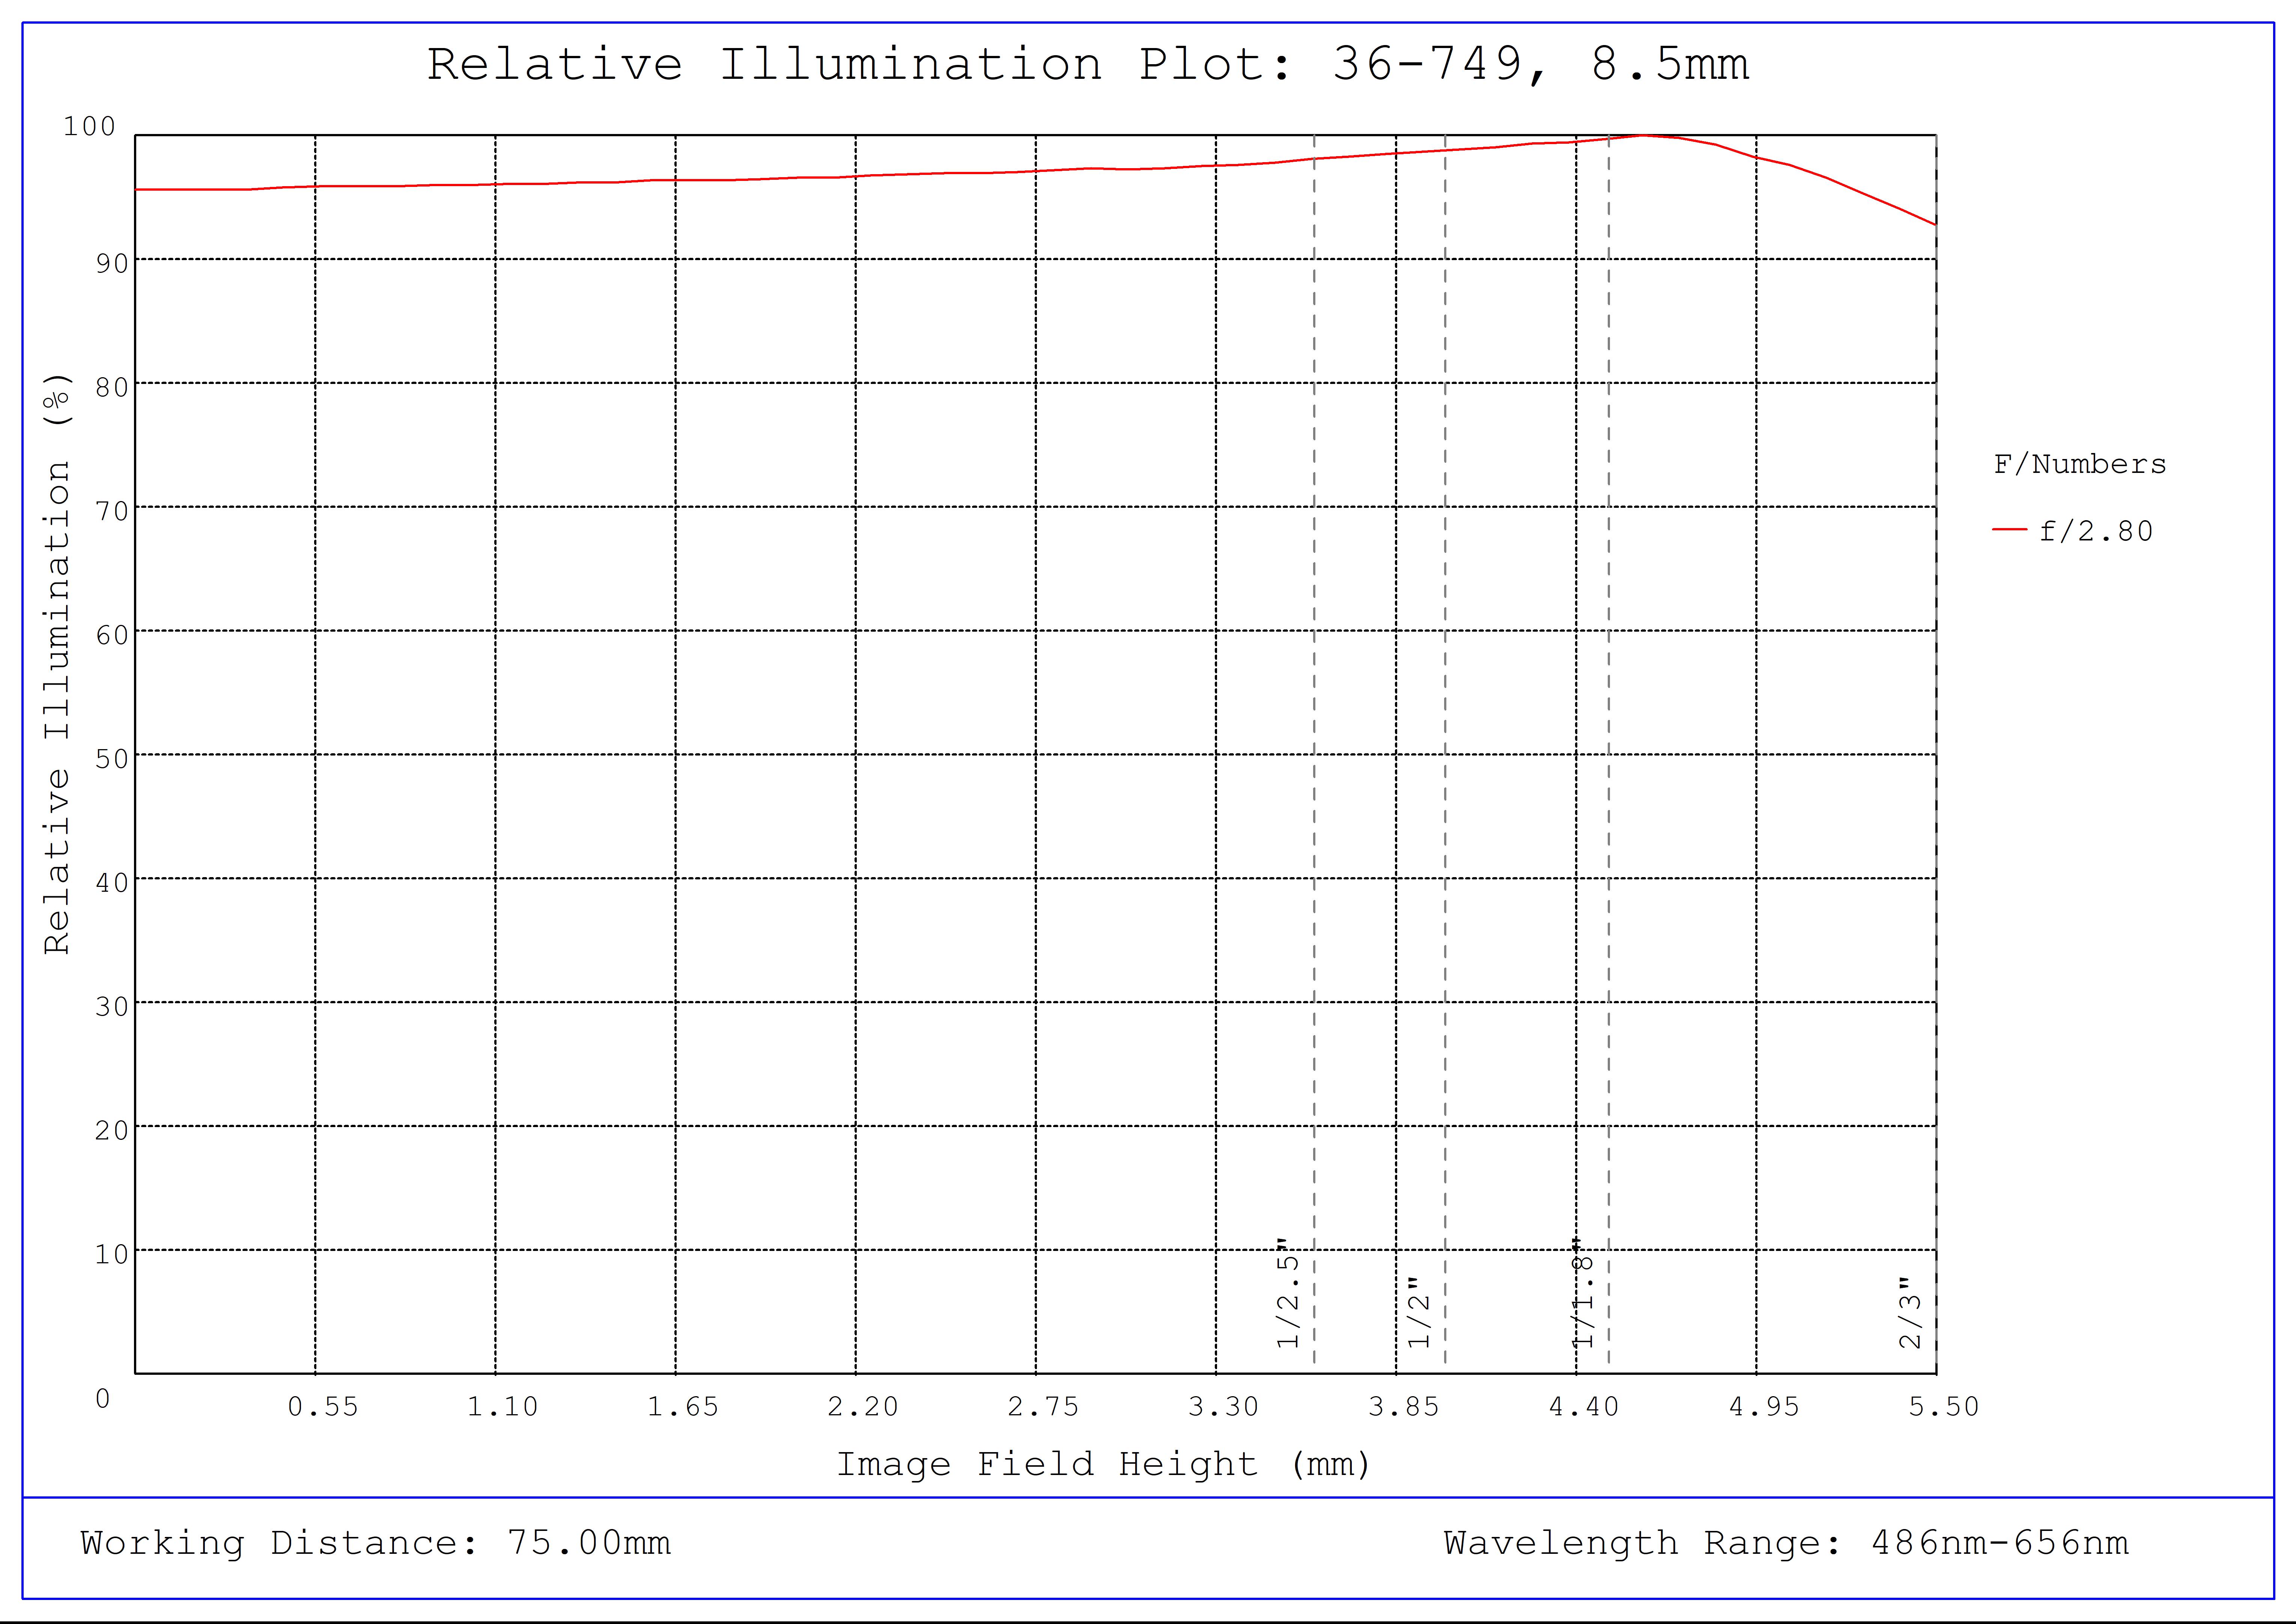 #36-749, 8.5mm f/2.8, 75mm-∞ Primary WD, HRi Series Fixed Focal Length Lens, Relative Illumination Plot